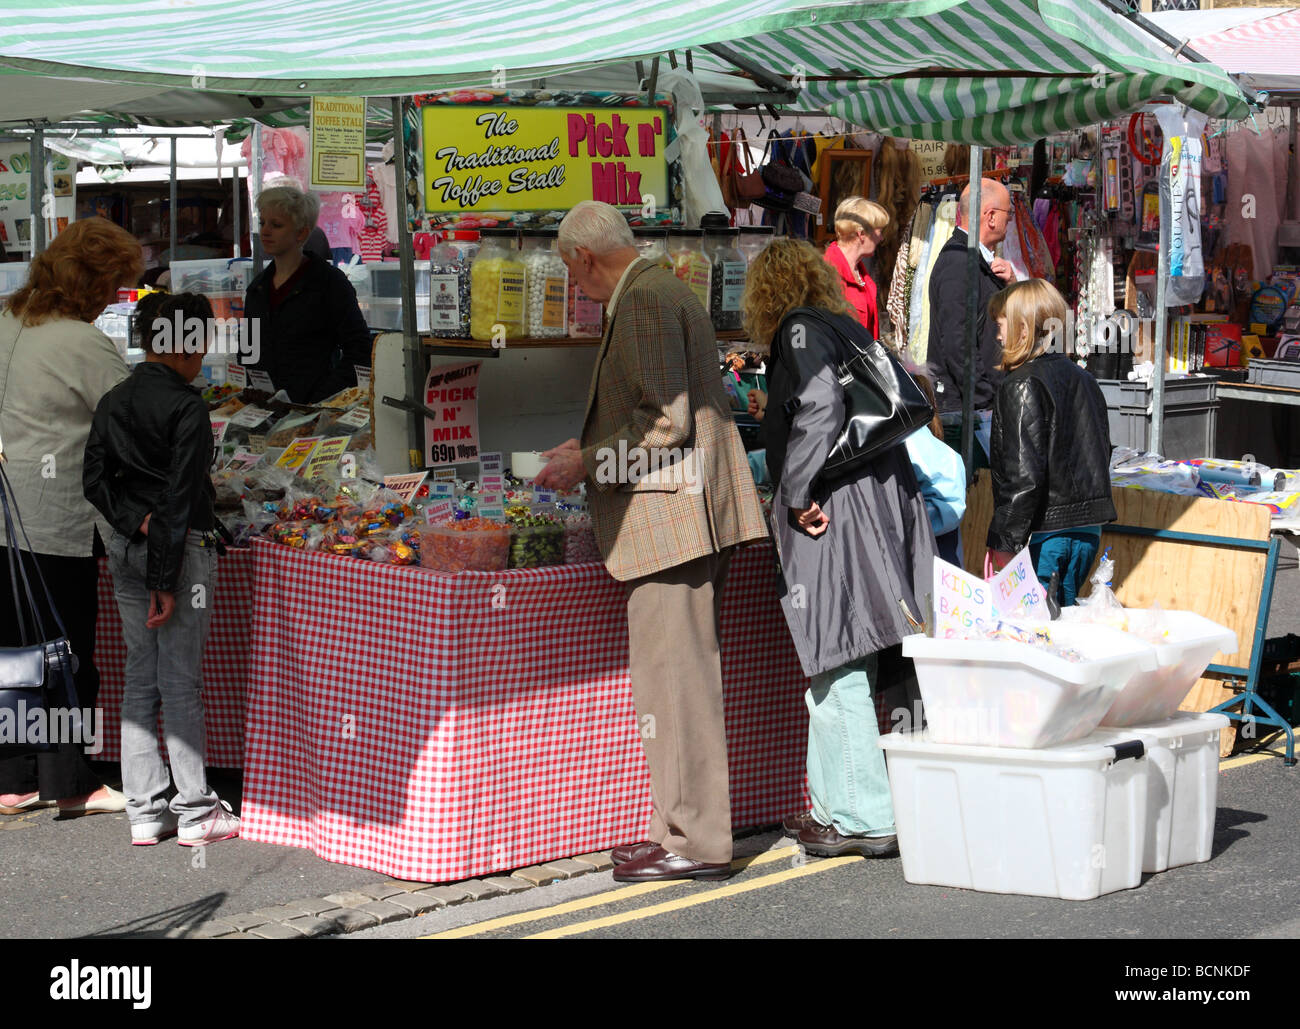 A Pick & Mix sweet stall at Bakewell Market, Derbyshire, England, U.K. Stock Photo